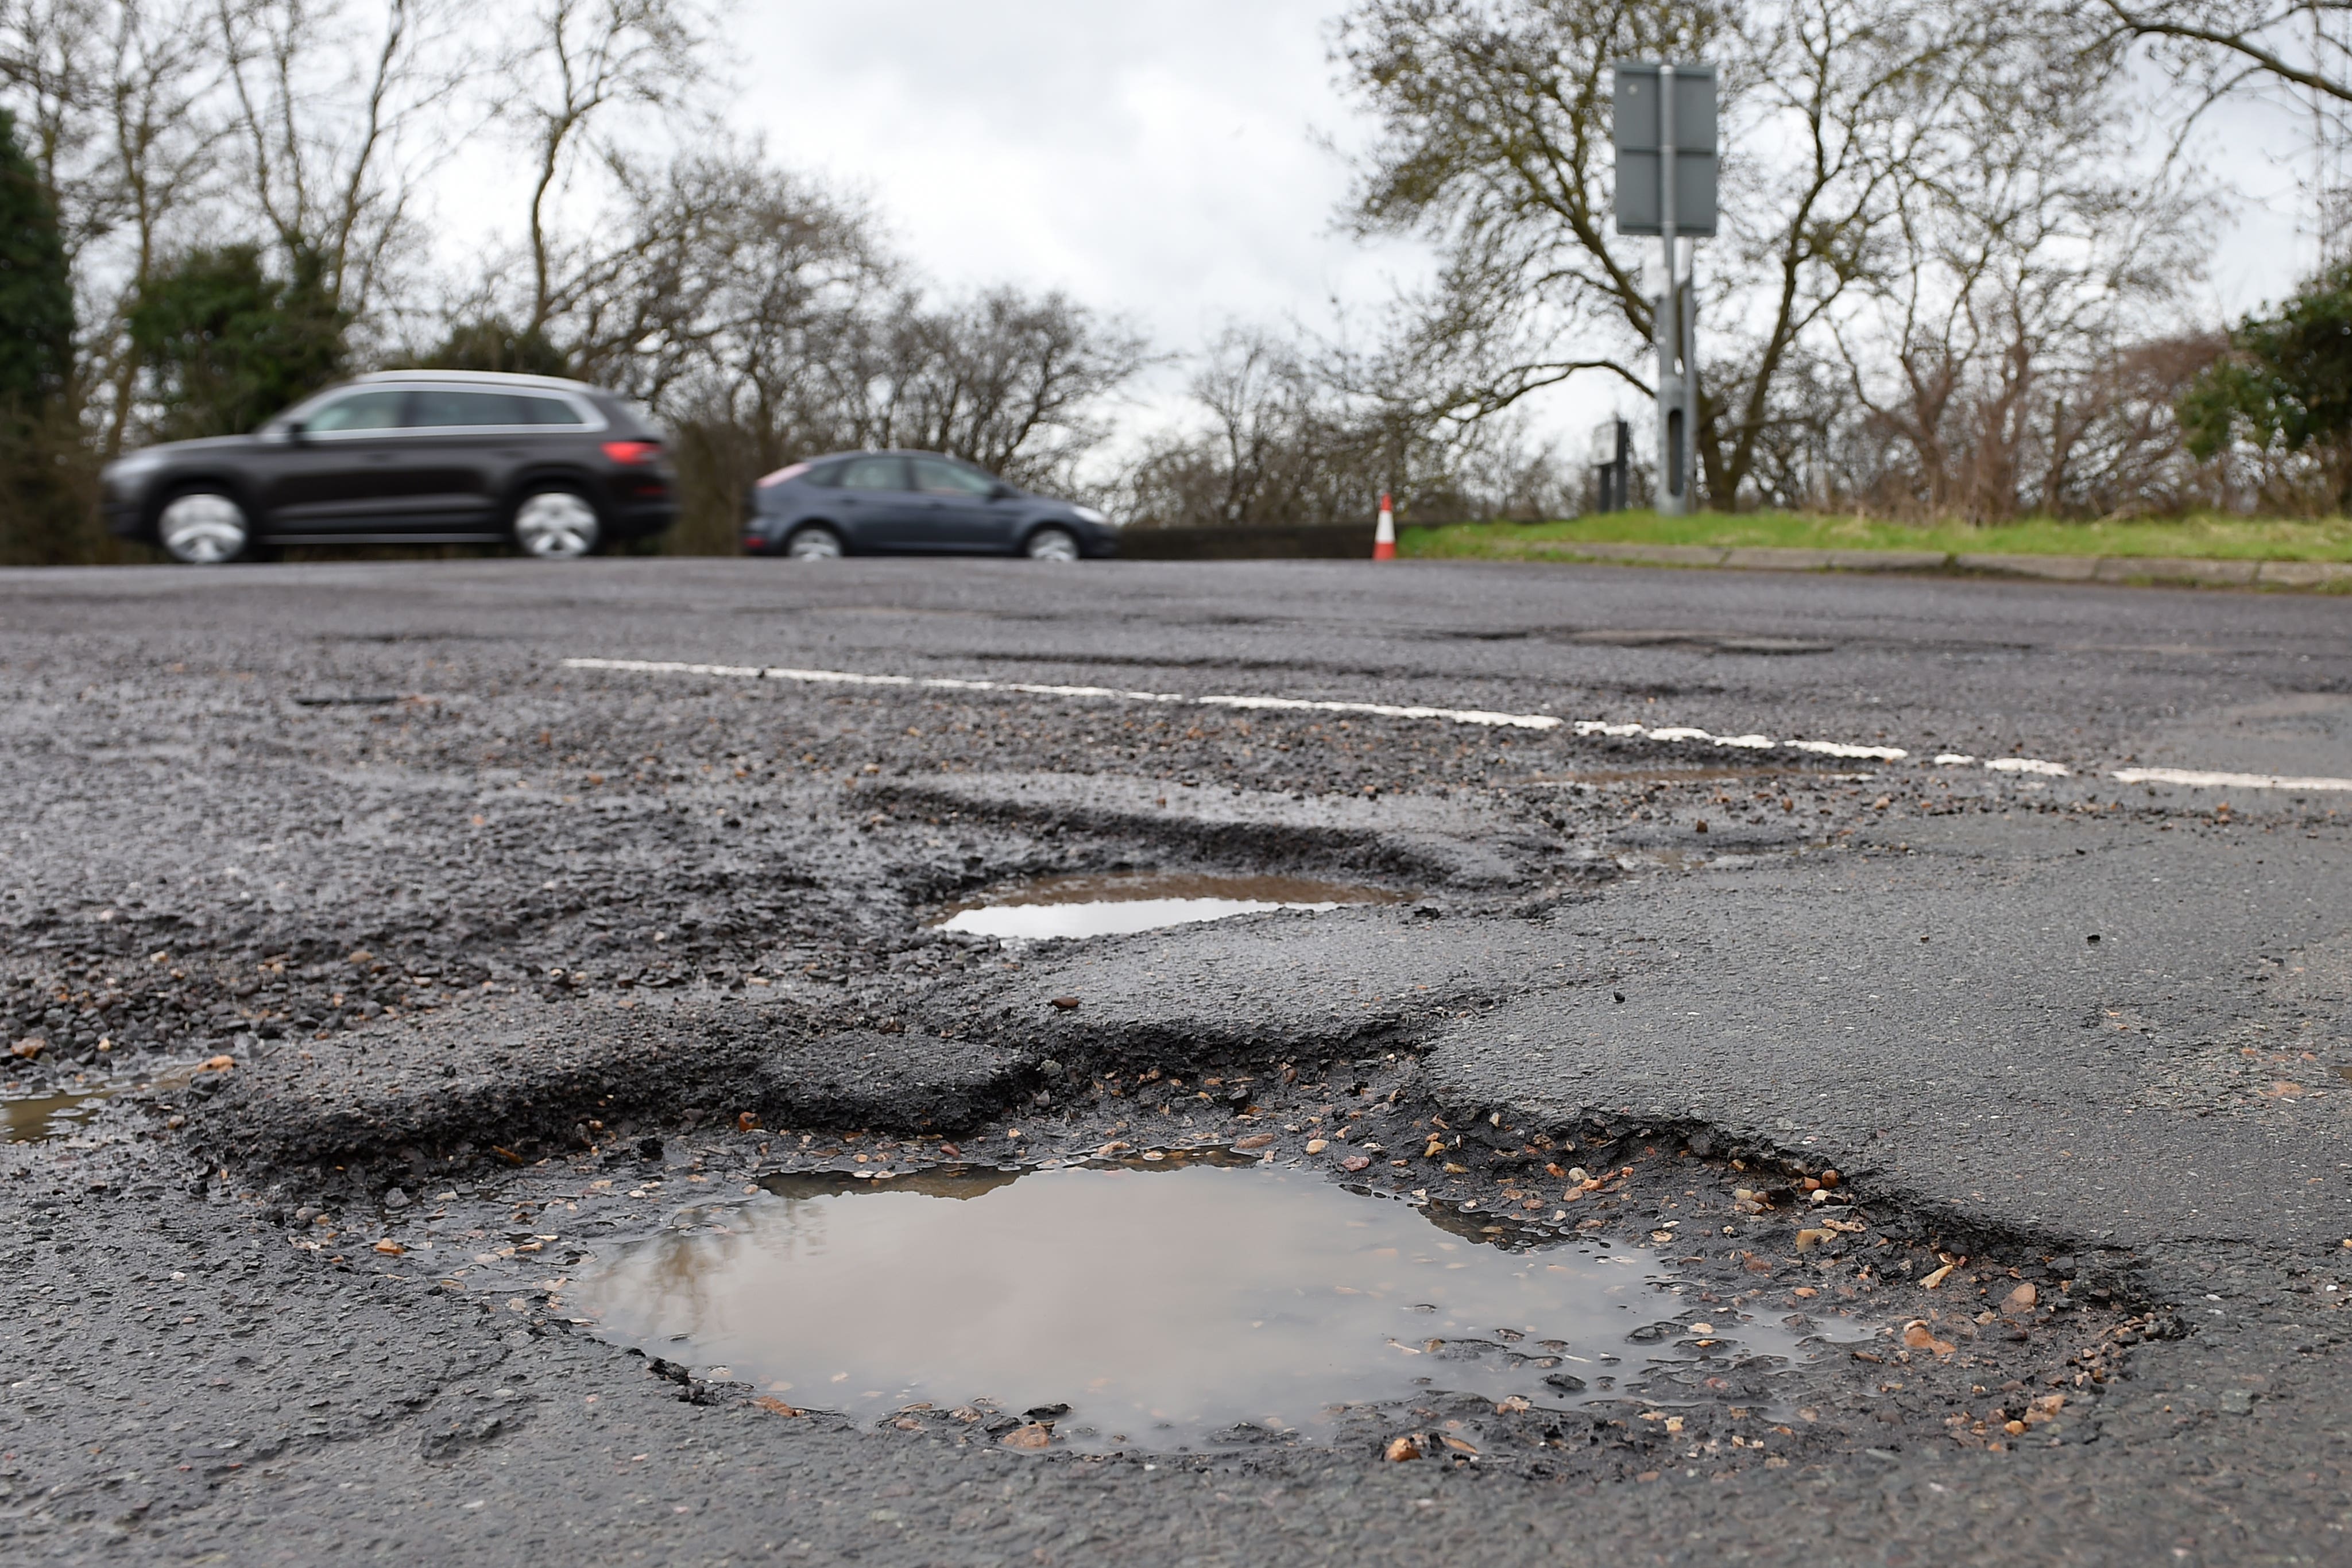 The Liberal Democrats have pledged to fix 1.2 million potholes a year (Joe Giddens/PA)